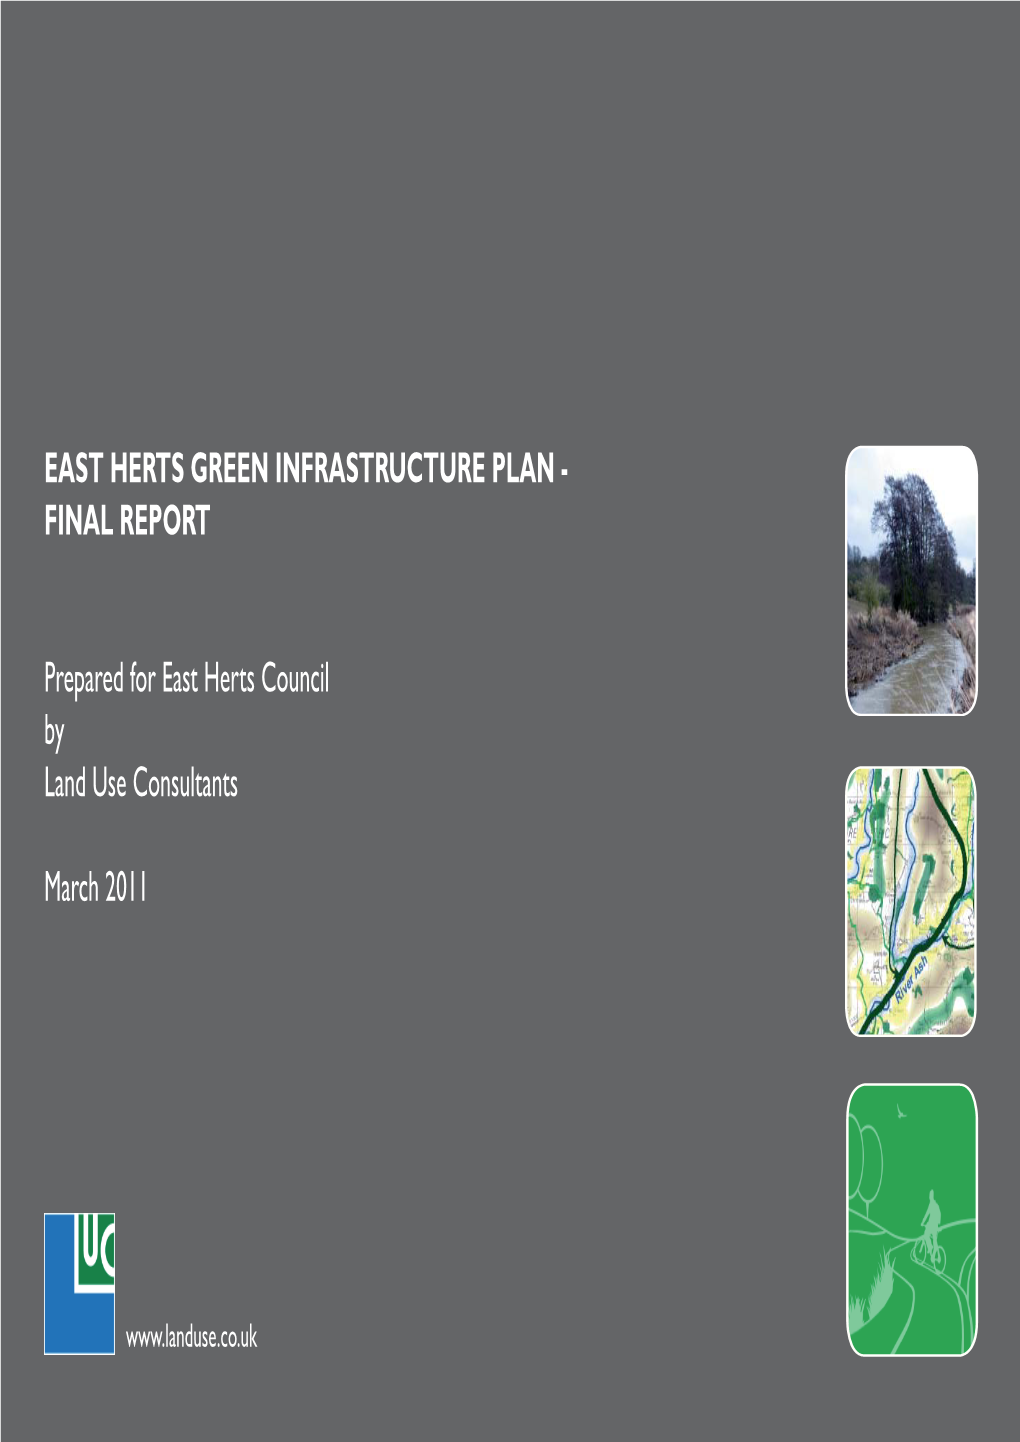 East Herts Green Infrastructure Plan - Final Report